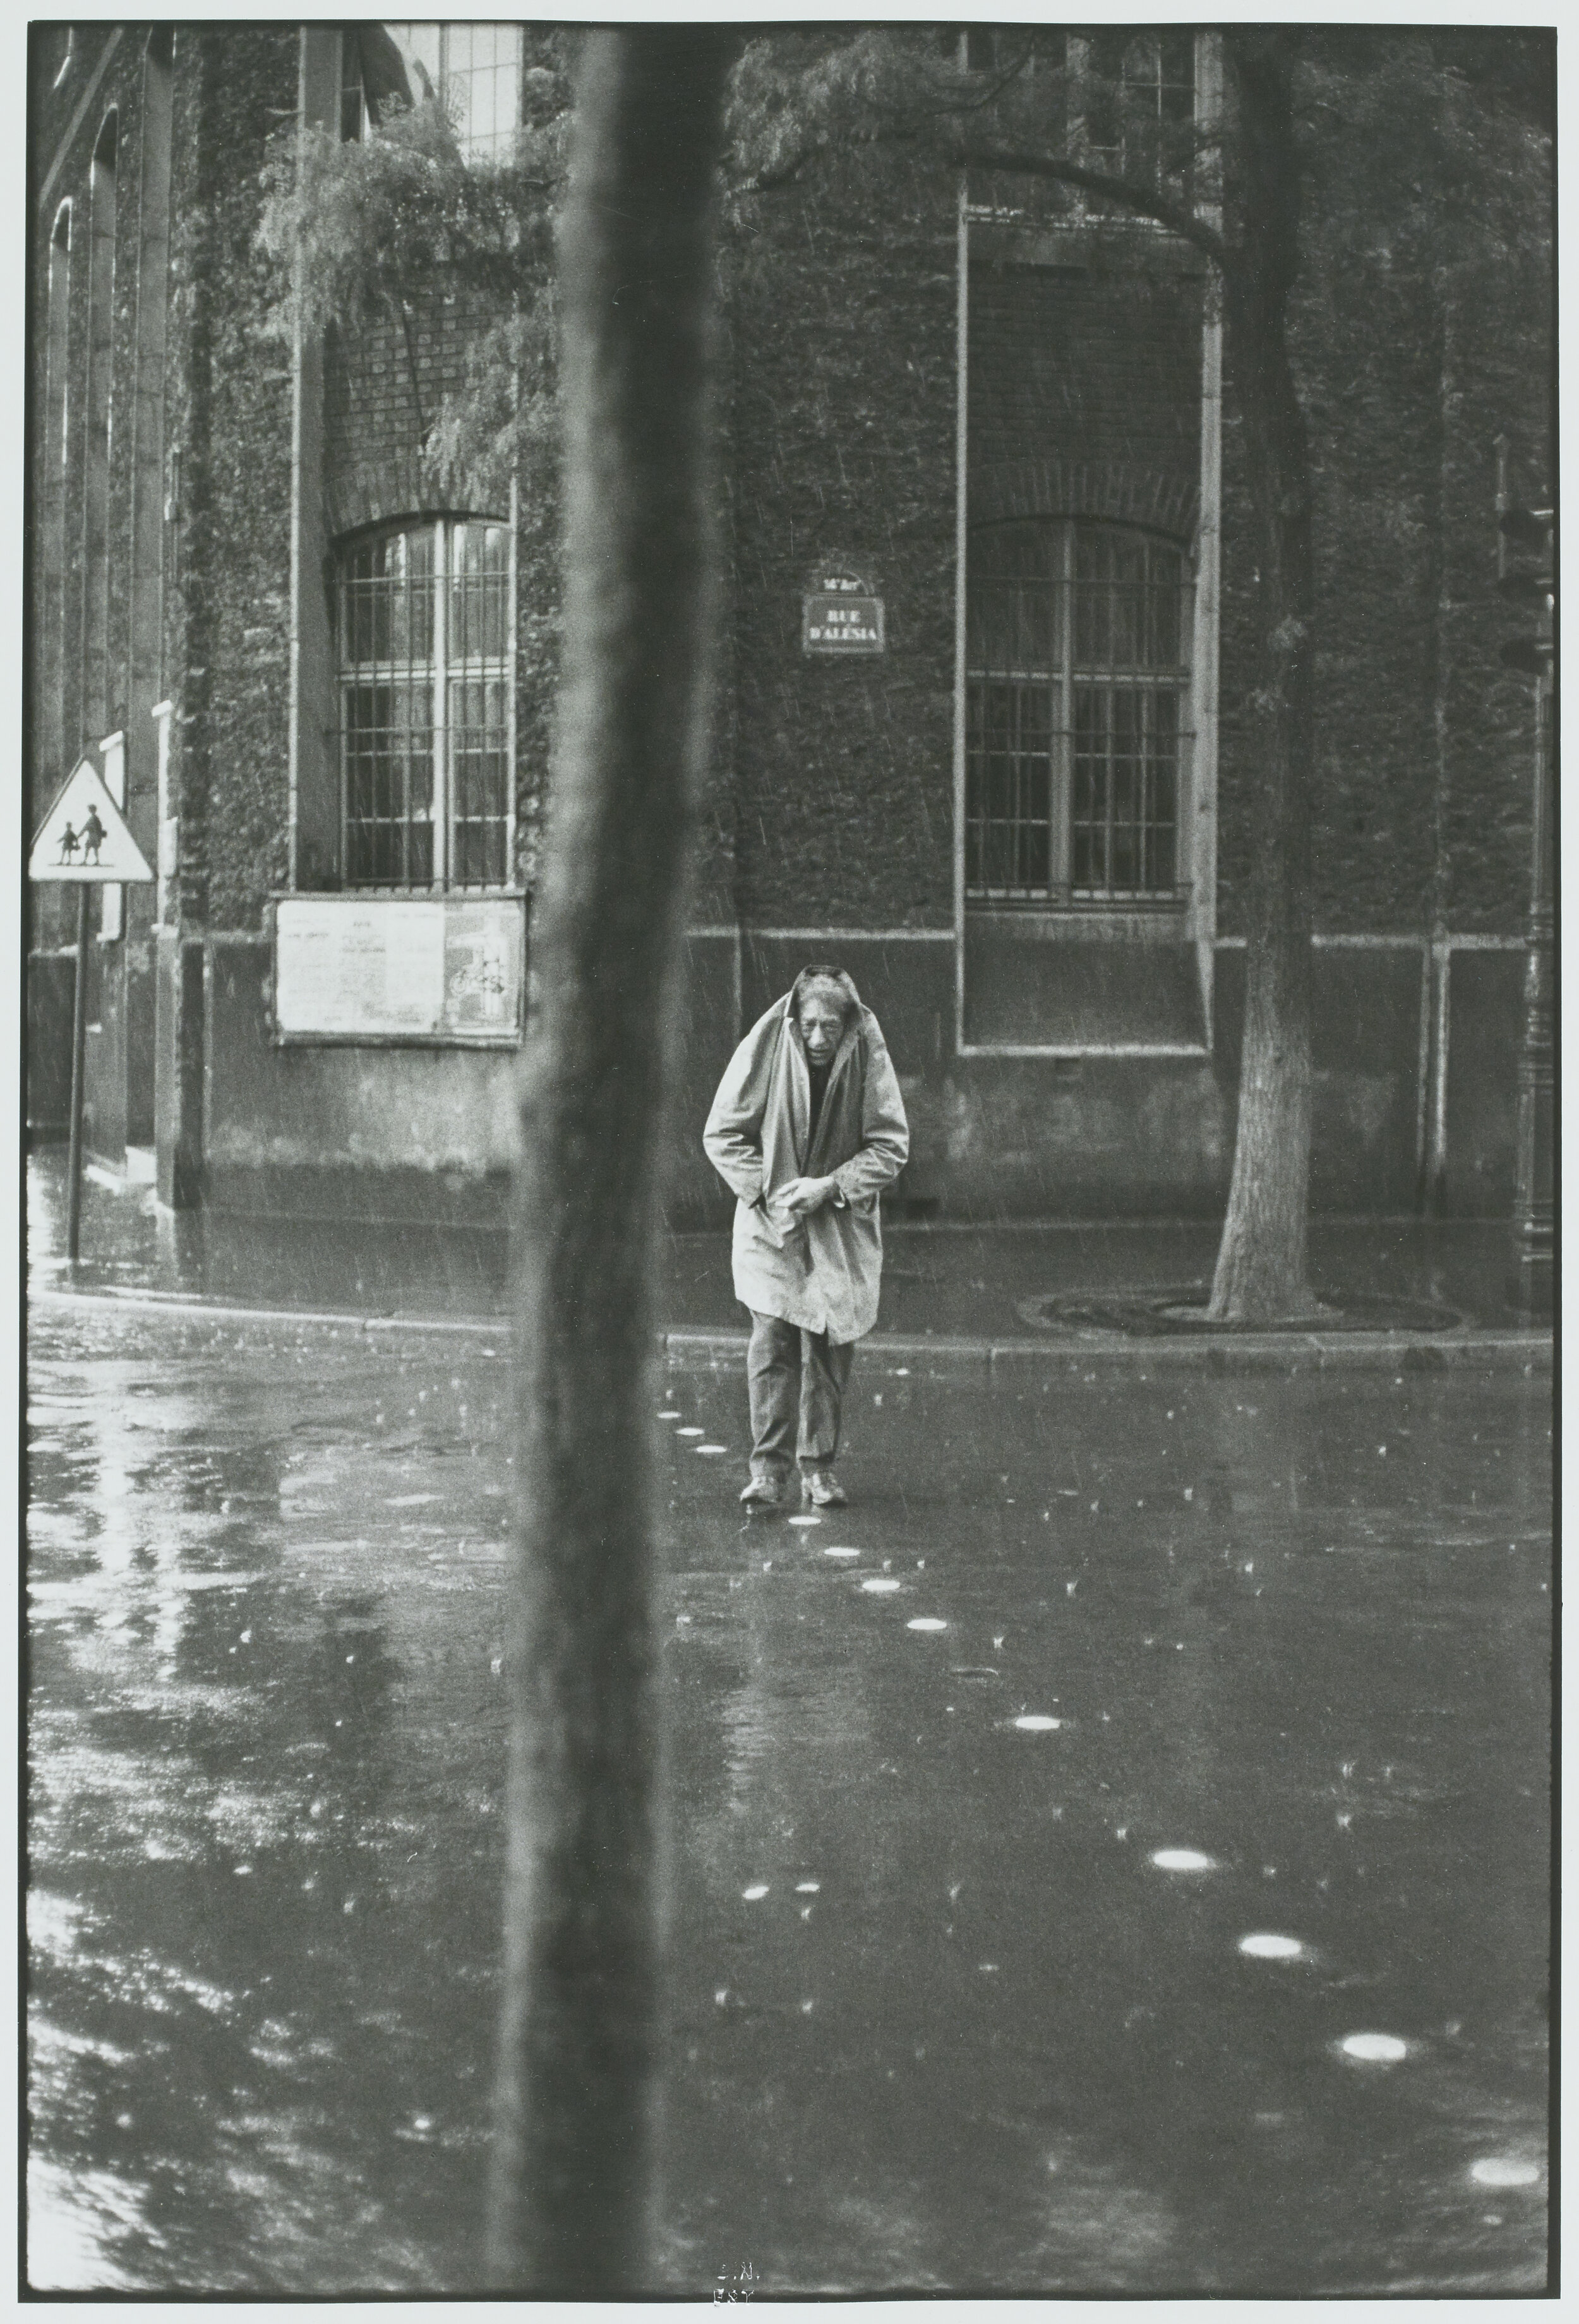  Henri Cartier-Bresson  Alberto Giacometti, Rue d'Alésia, Paris, France, 1961,  épreuve gélatino-argentique de 1973 © Fondation Henri Cartier-Bresson / Magnum Photos 